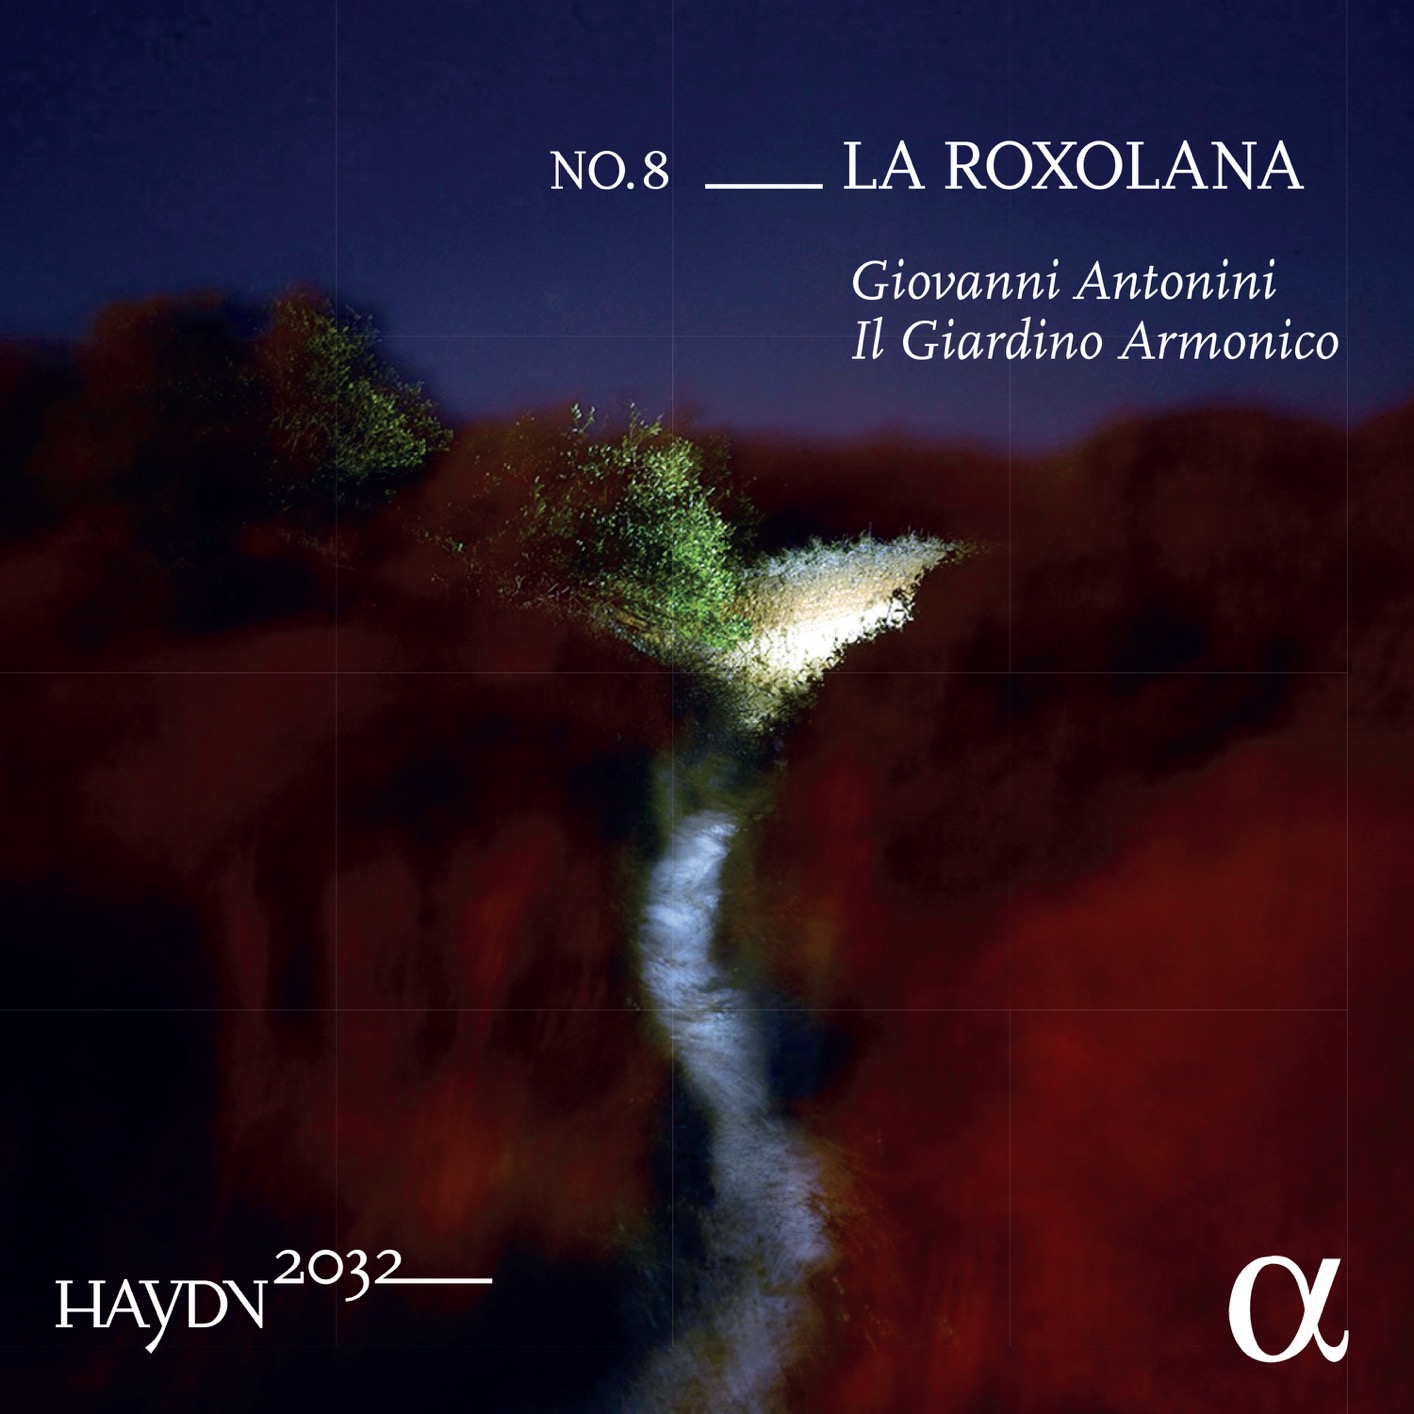 Giovanni Antonini & Il Giardino Armonico - Haydn 2032, Vol. 8: La Roxolana (2020) [FLAC 24bit/176,4kHz]